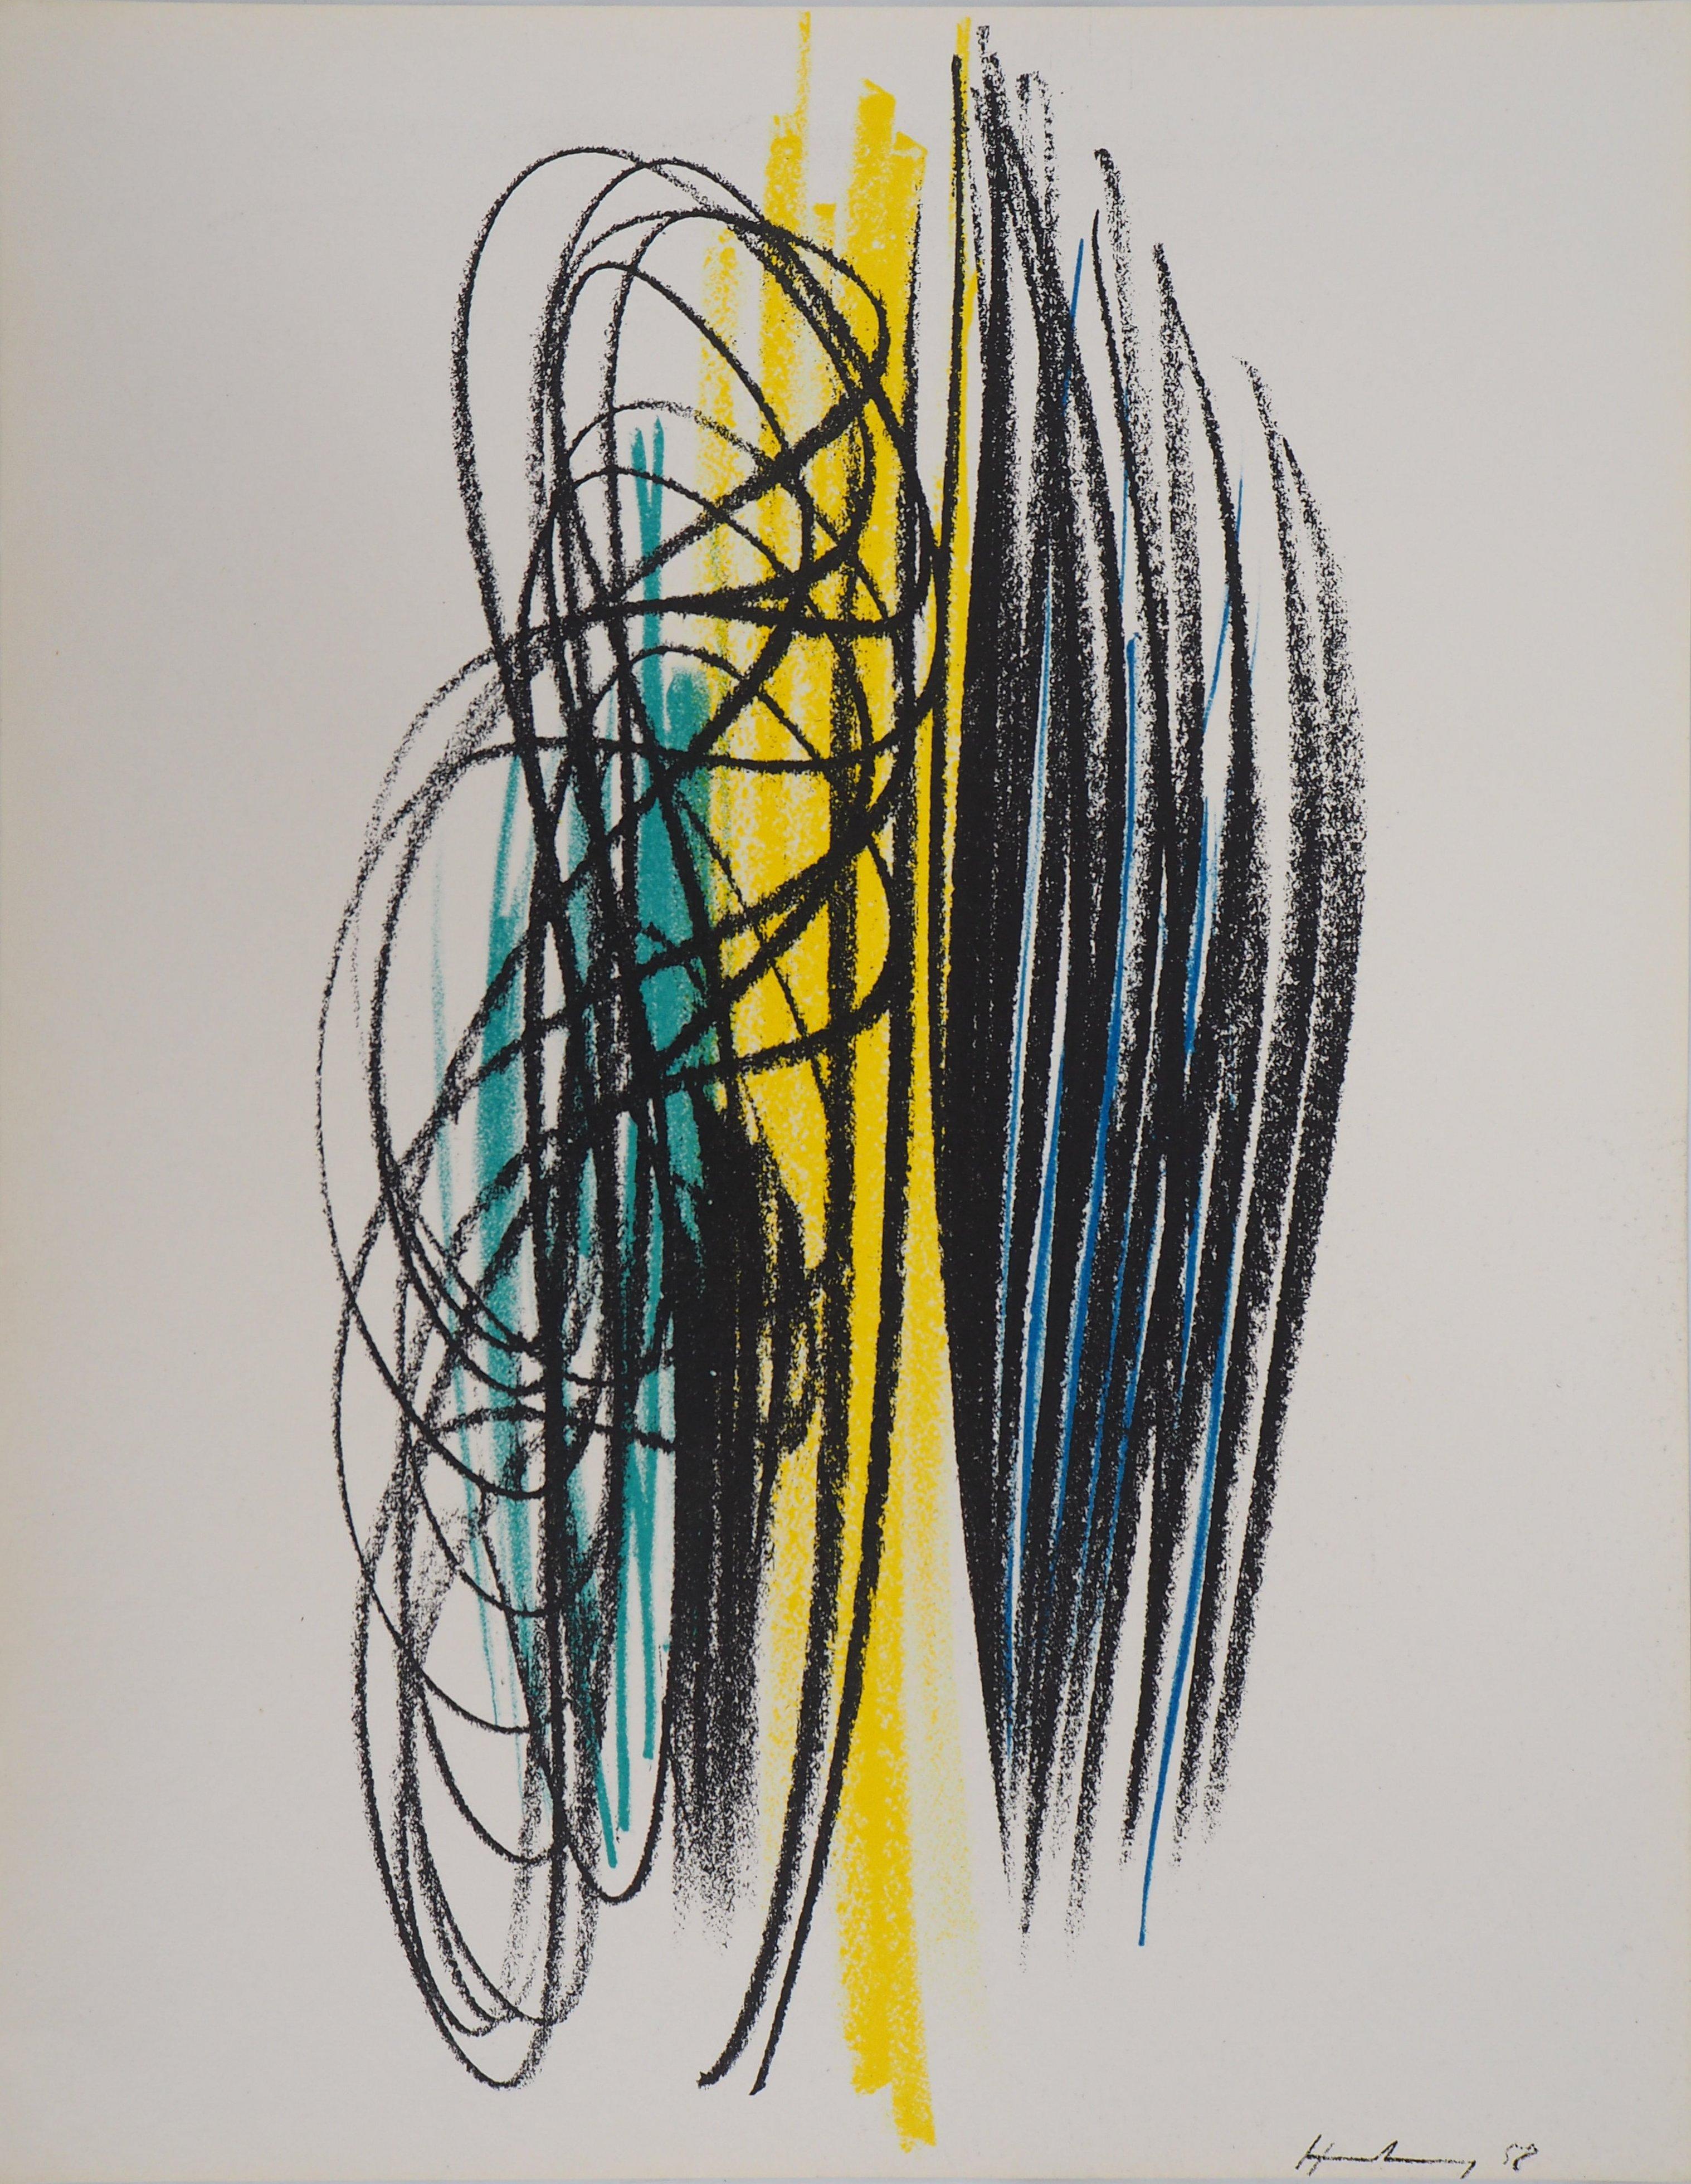 Composition with Lines - Original lithograph, Mourlot 1959